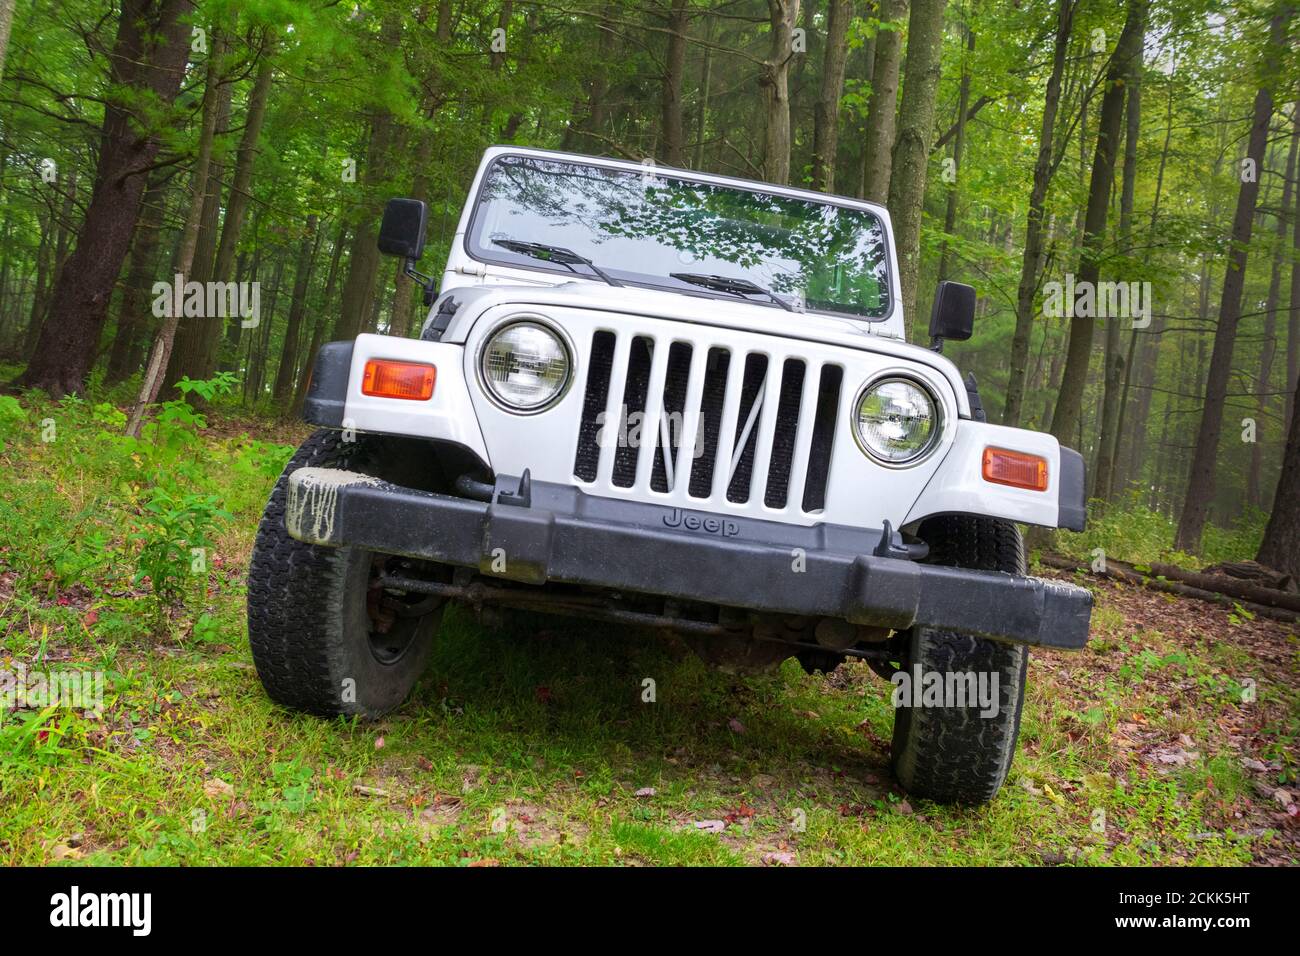 Jeep Wrangler Front View Stock Photo